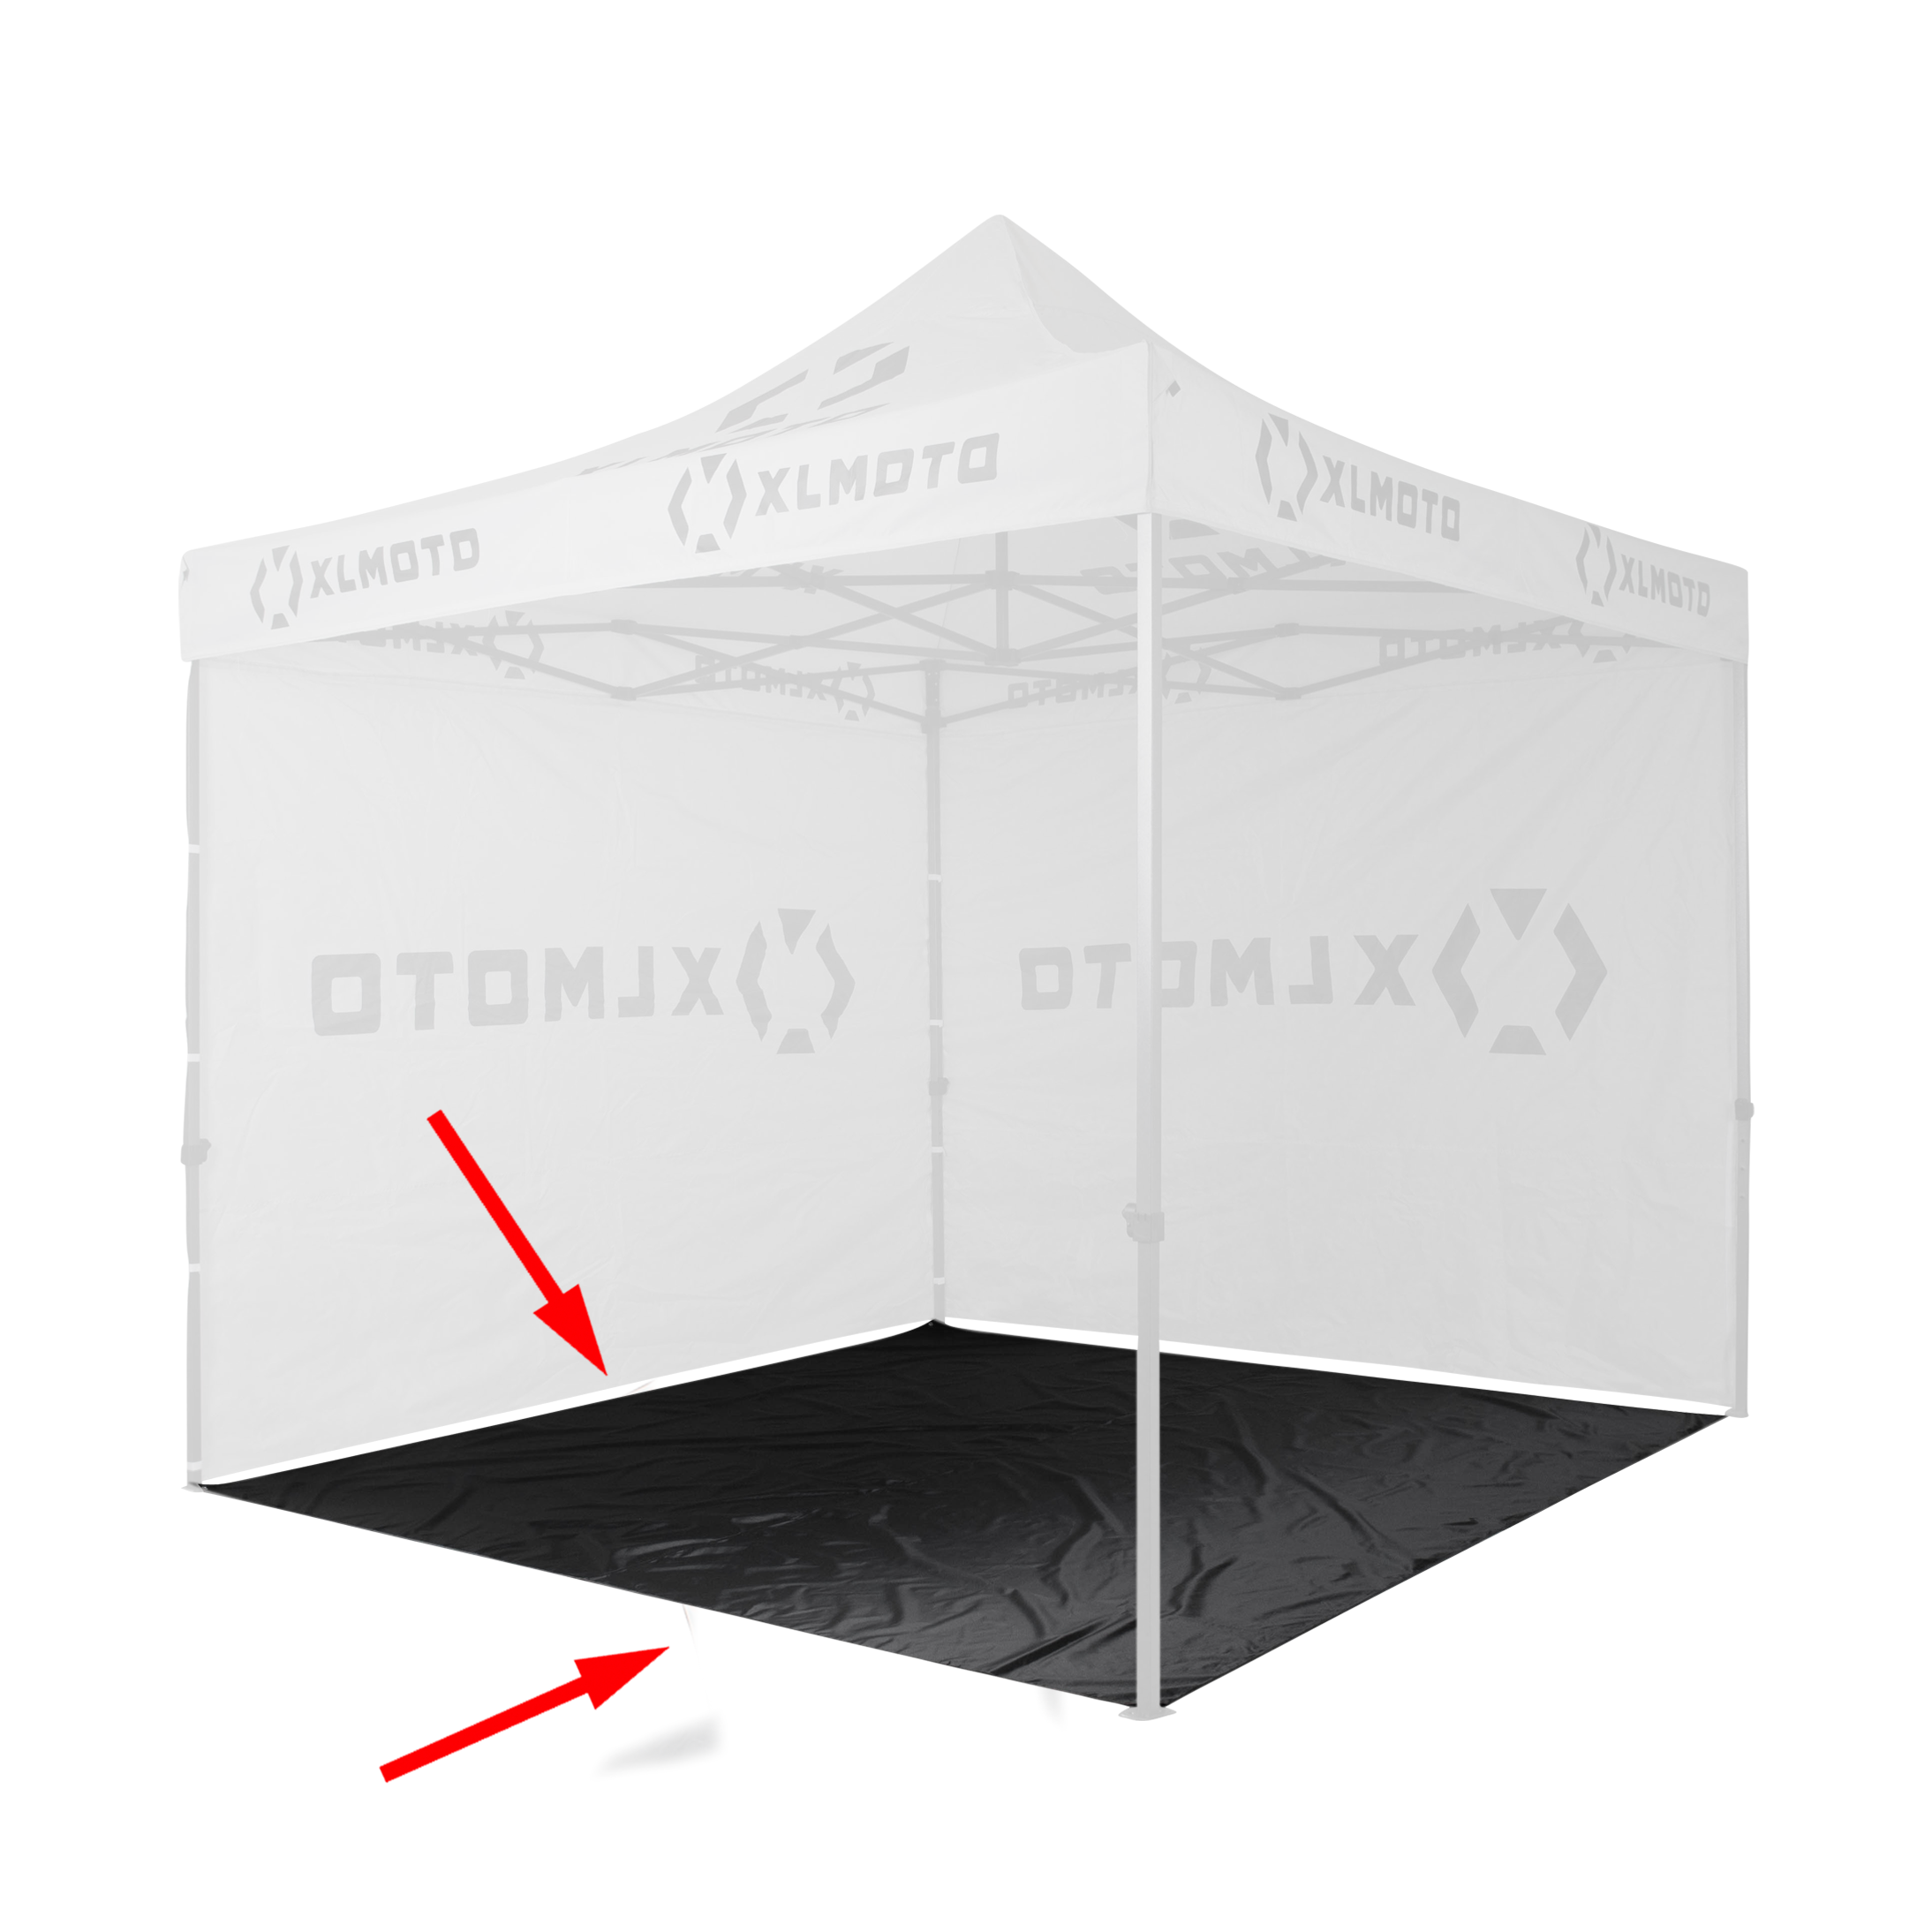 Tente paddock 24MX